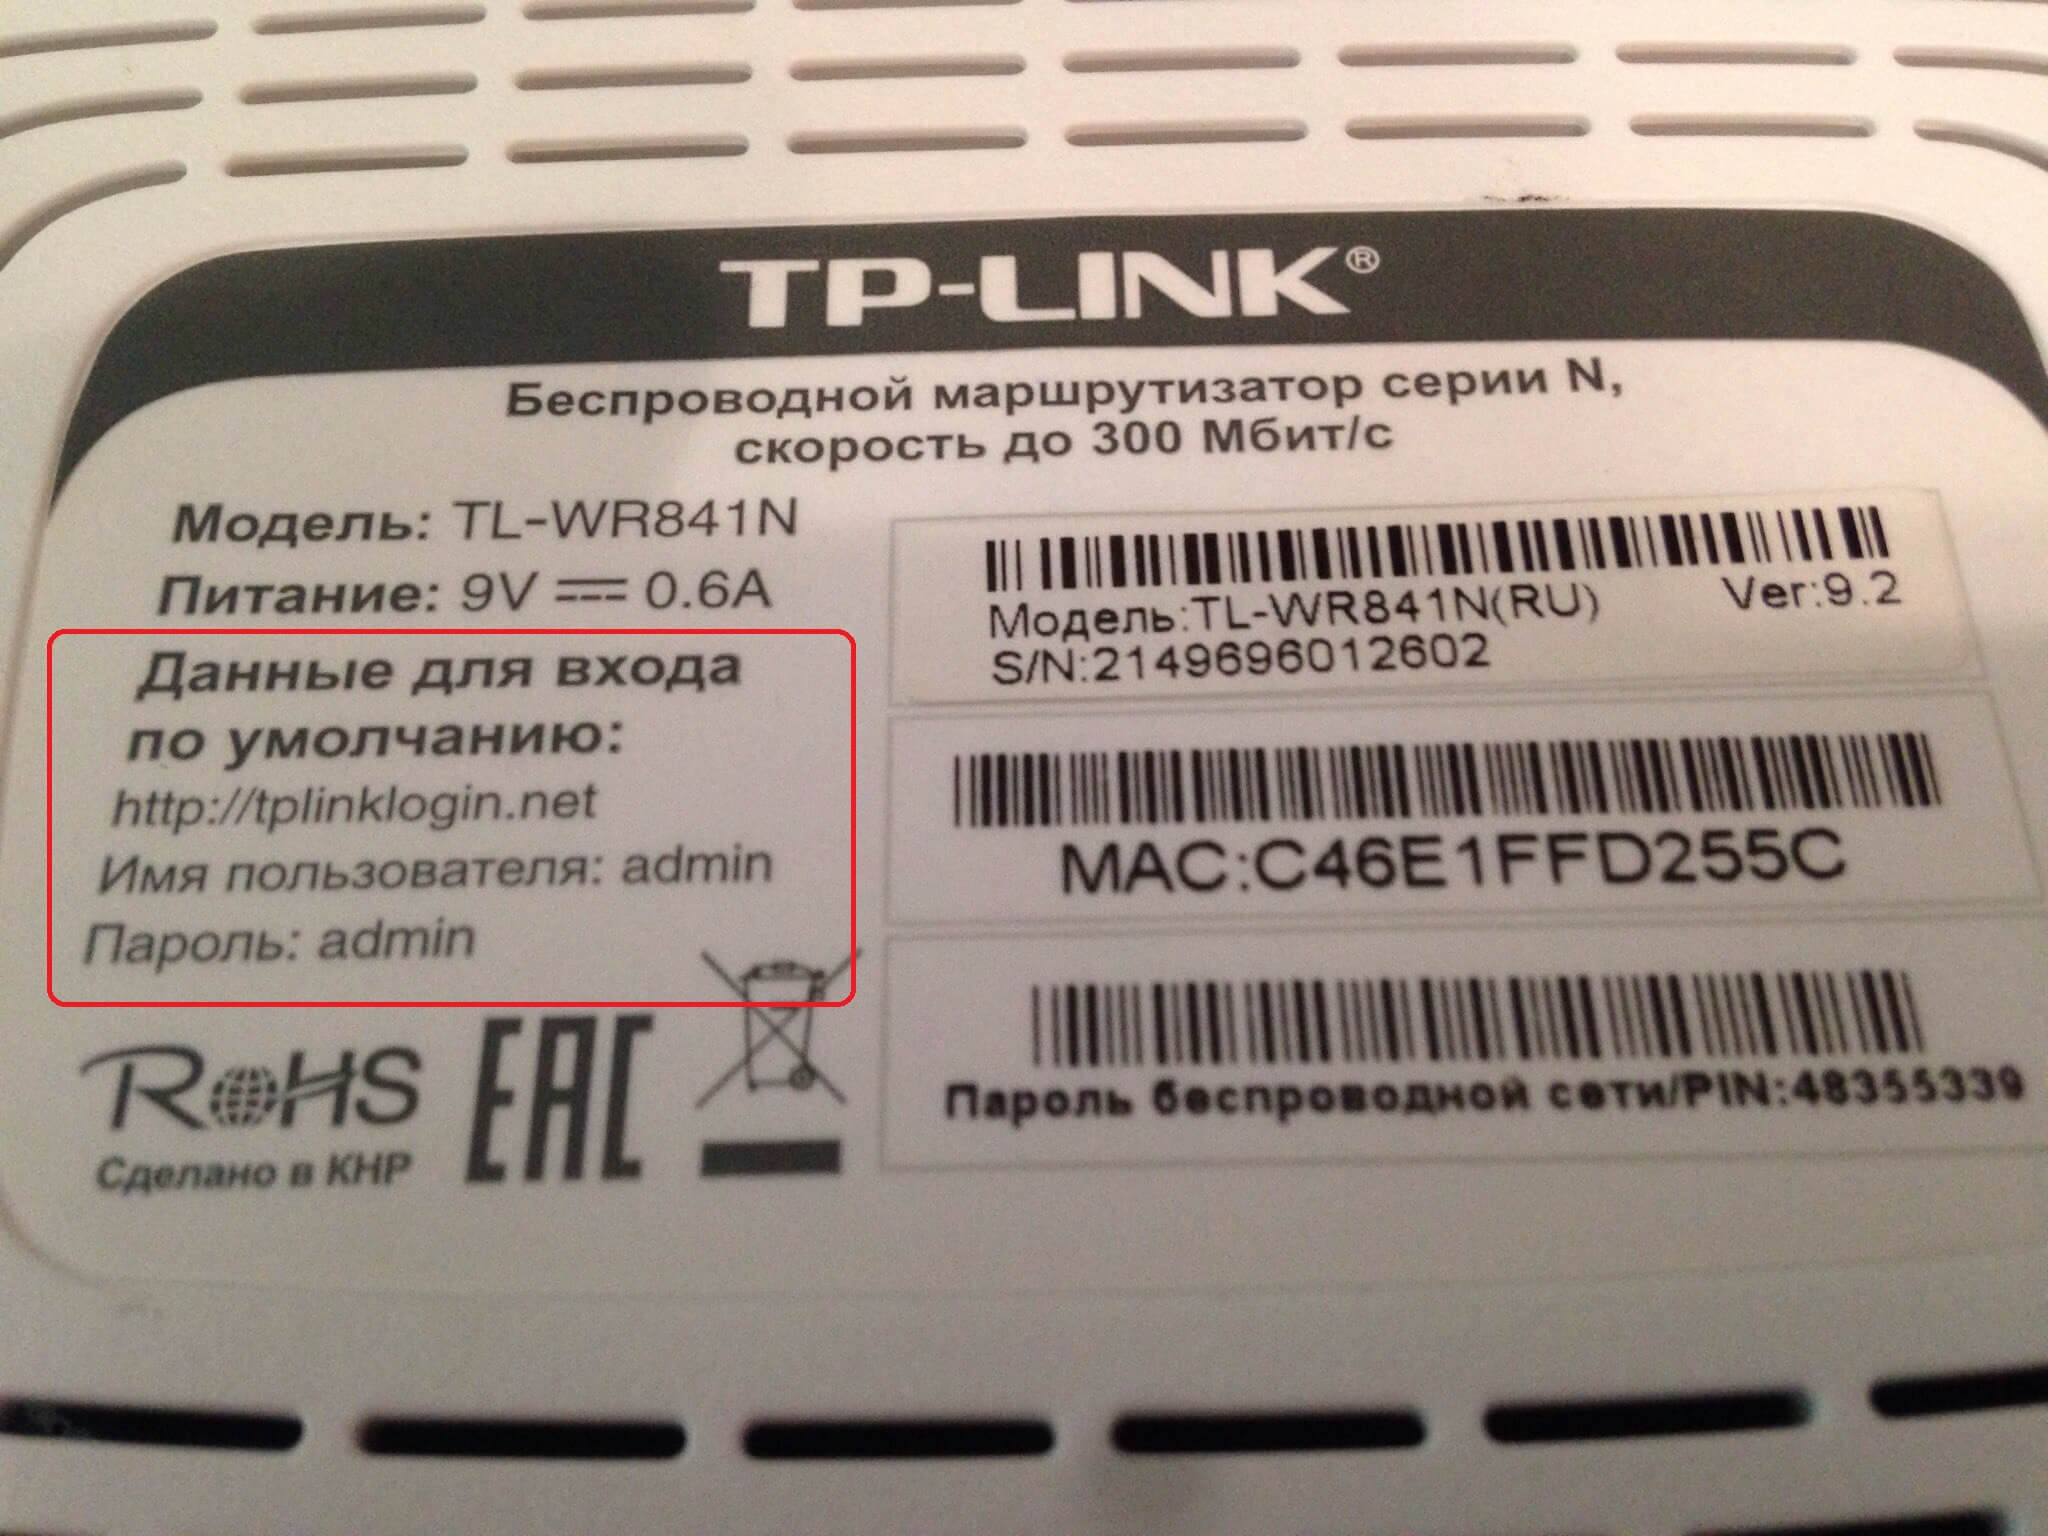 Маршрутизаторы TP-LINK: стандартный маршрутизатор по умолчанию и пароли Wi-Fi